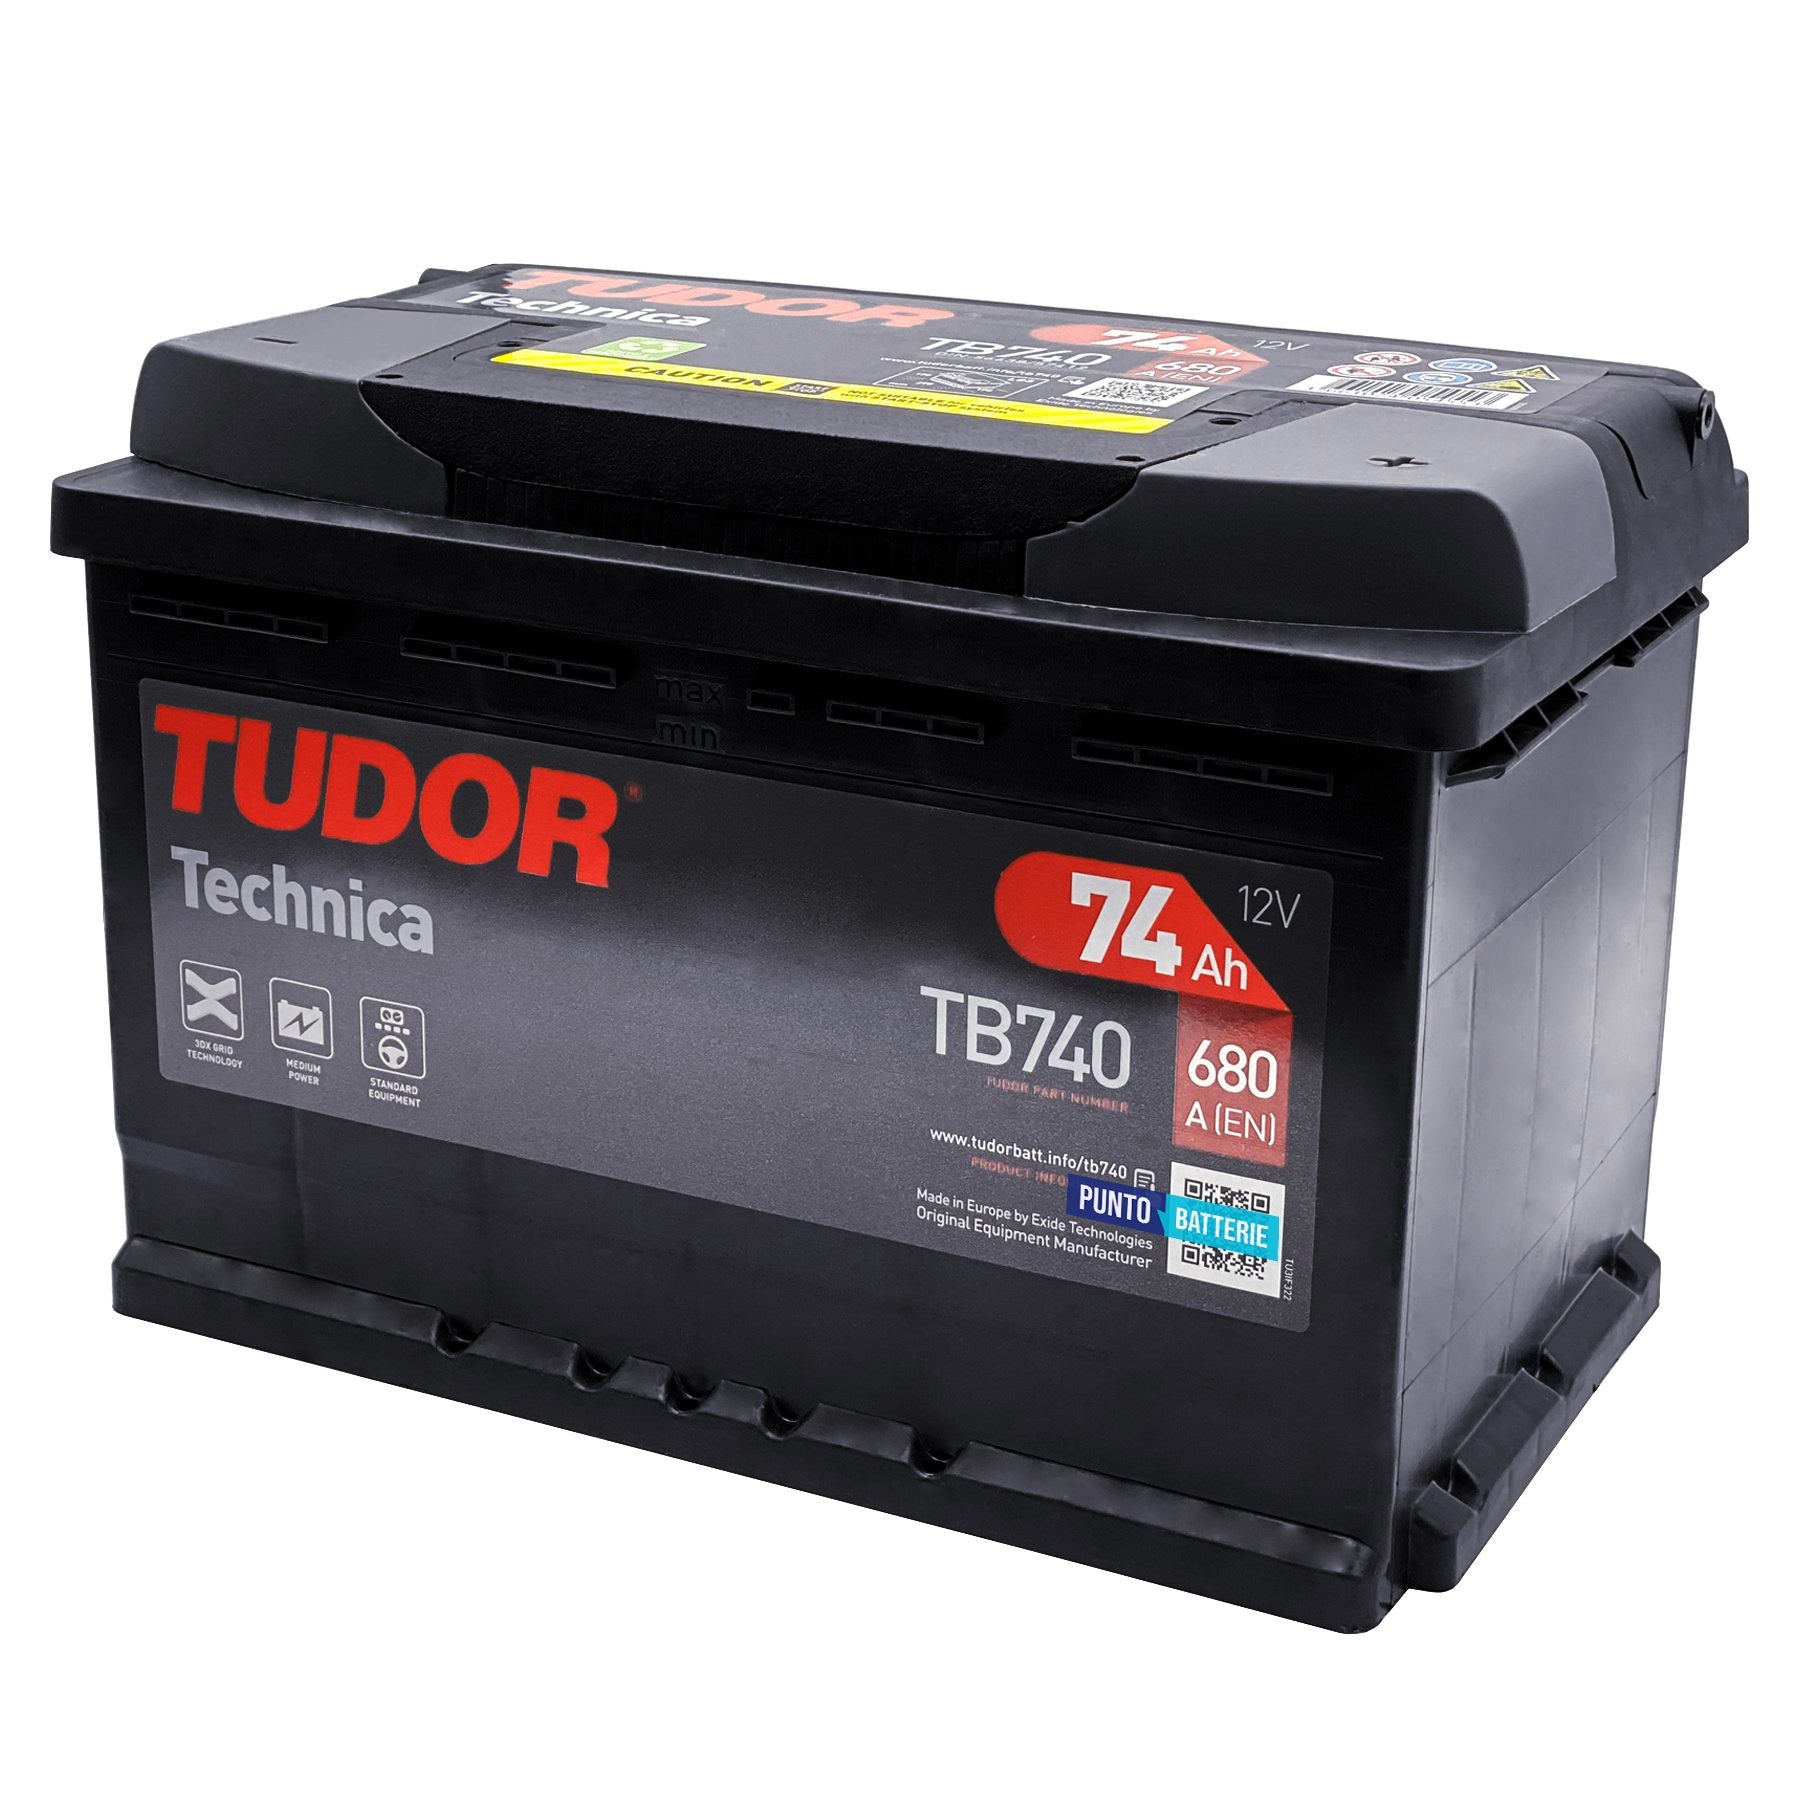 Batteria Tudor TB740 - Technica (12V, 74Ah, 680A) - Puntobatterie